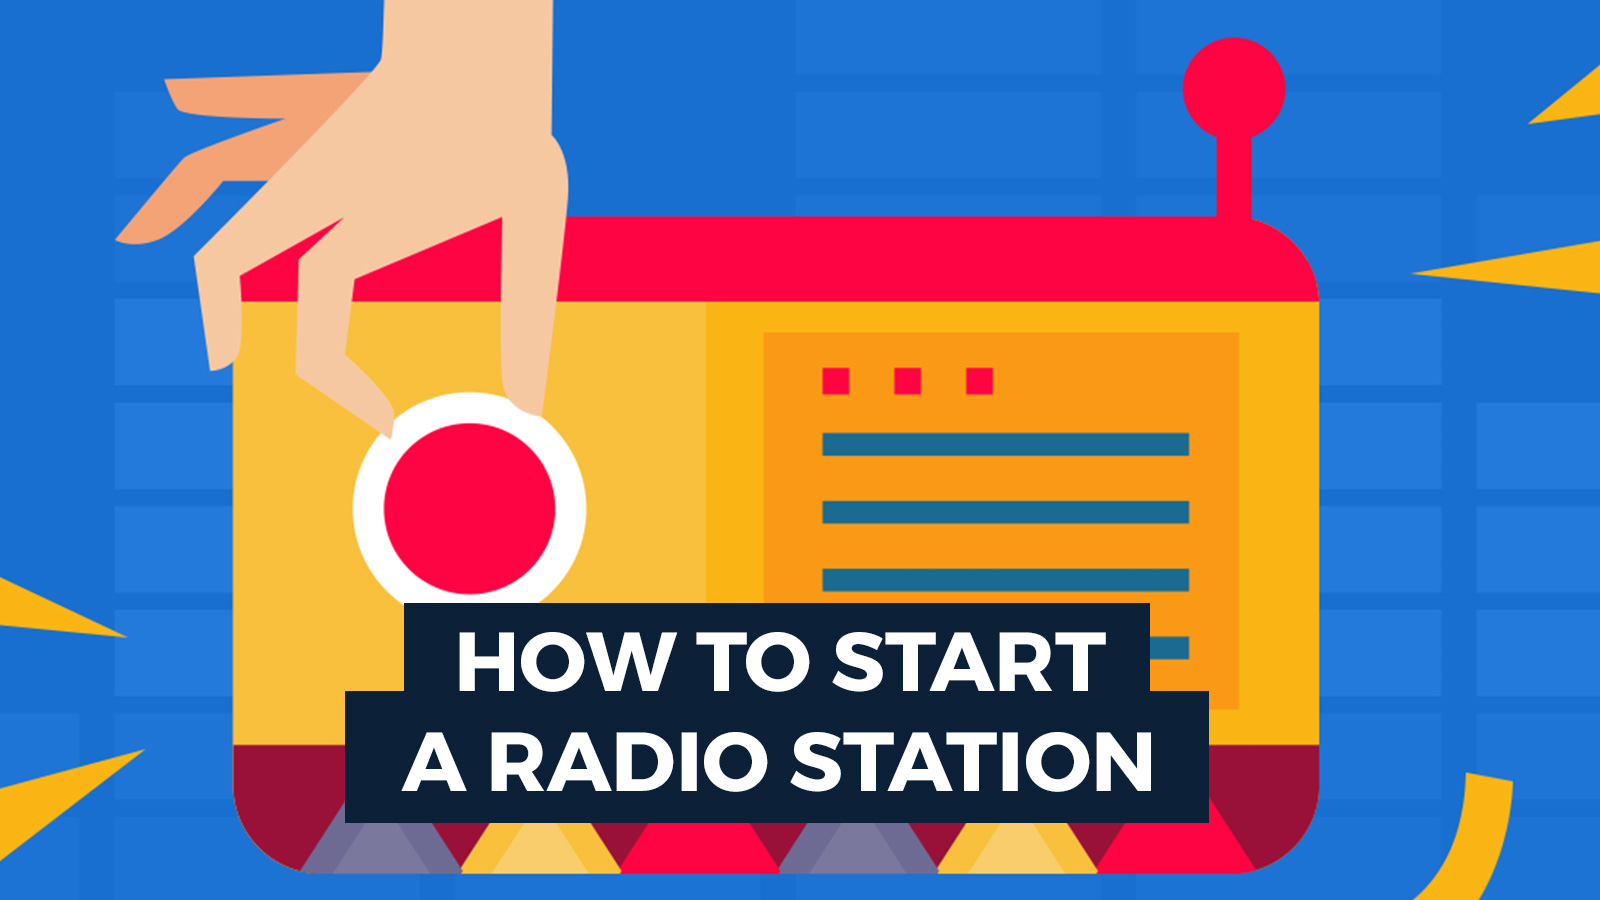 Radio station building design